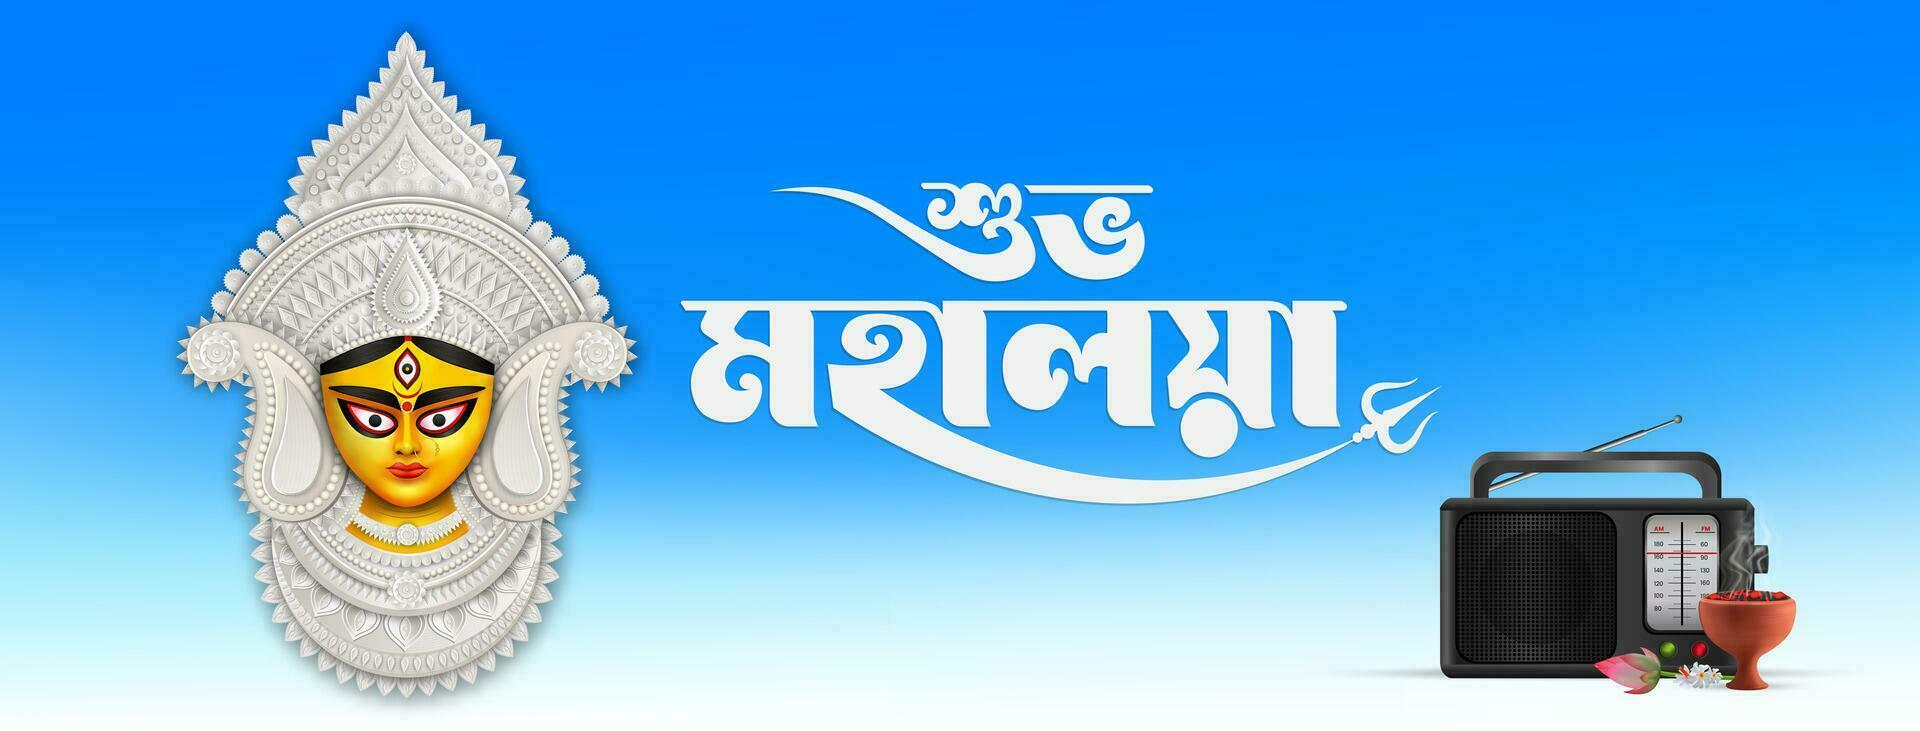 Mahalaya Creative Social Media Post for Durga Puja Celebration Durga Puja is the biggest festival in Bengal. vector